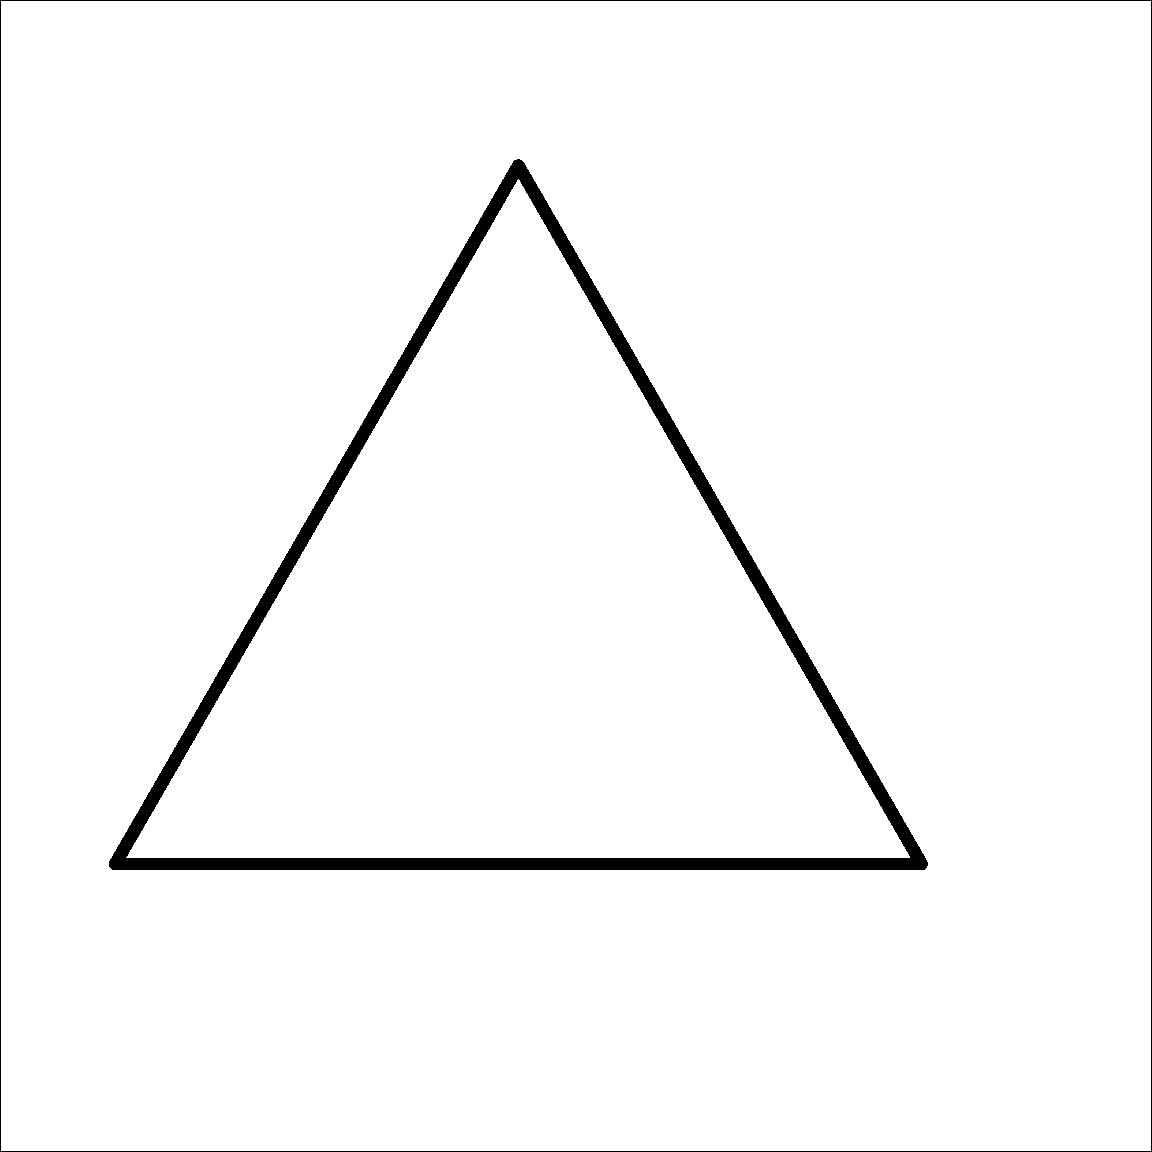 Regular triangle